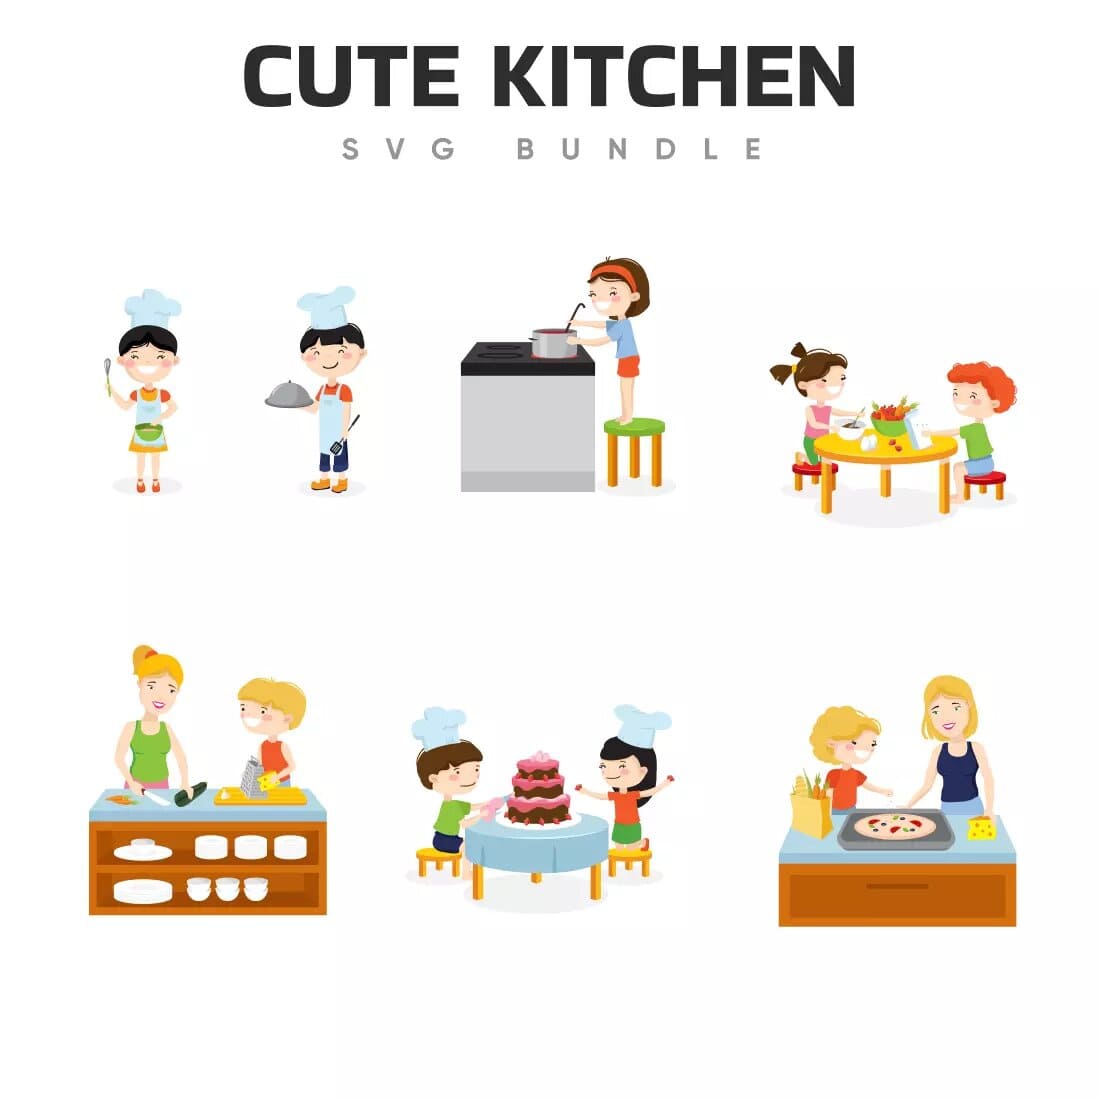 Cute Kitchen SVG Bundle Preview 4.